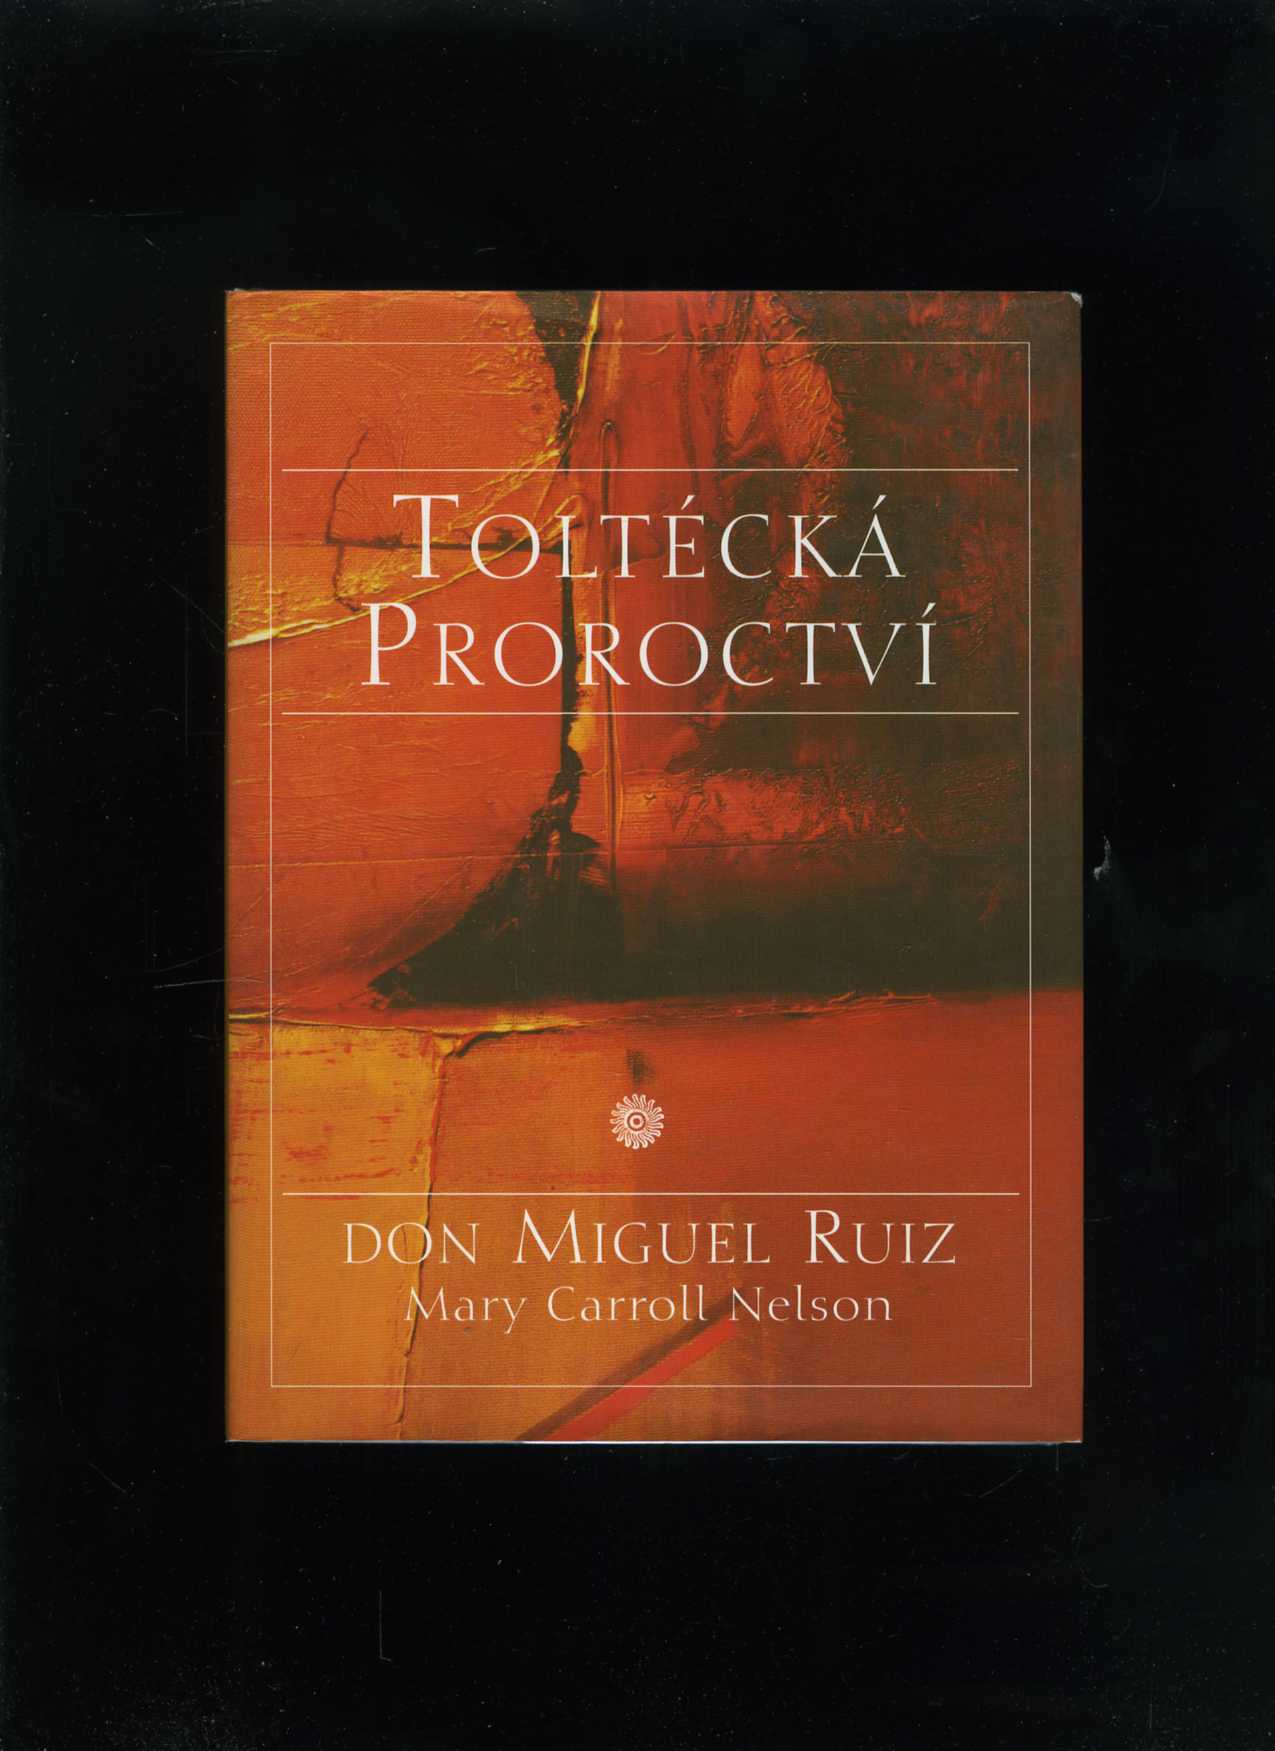 Toltécká proroctví (Don Miguel Ruiz, Mary Carroll Nelson)